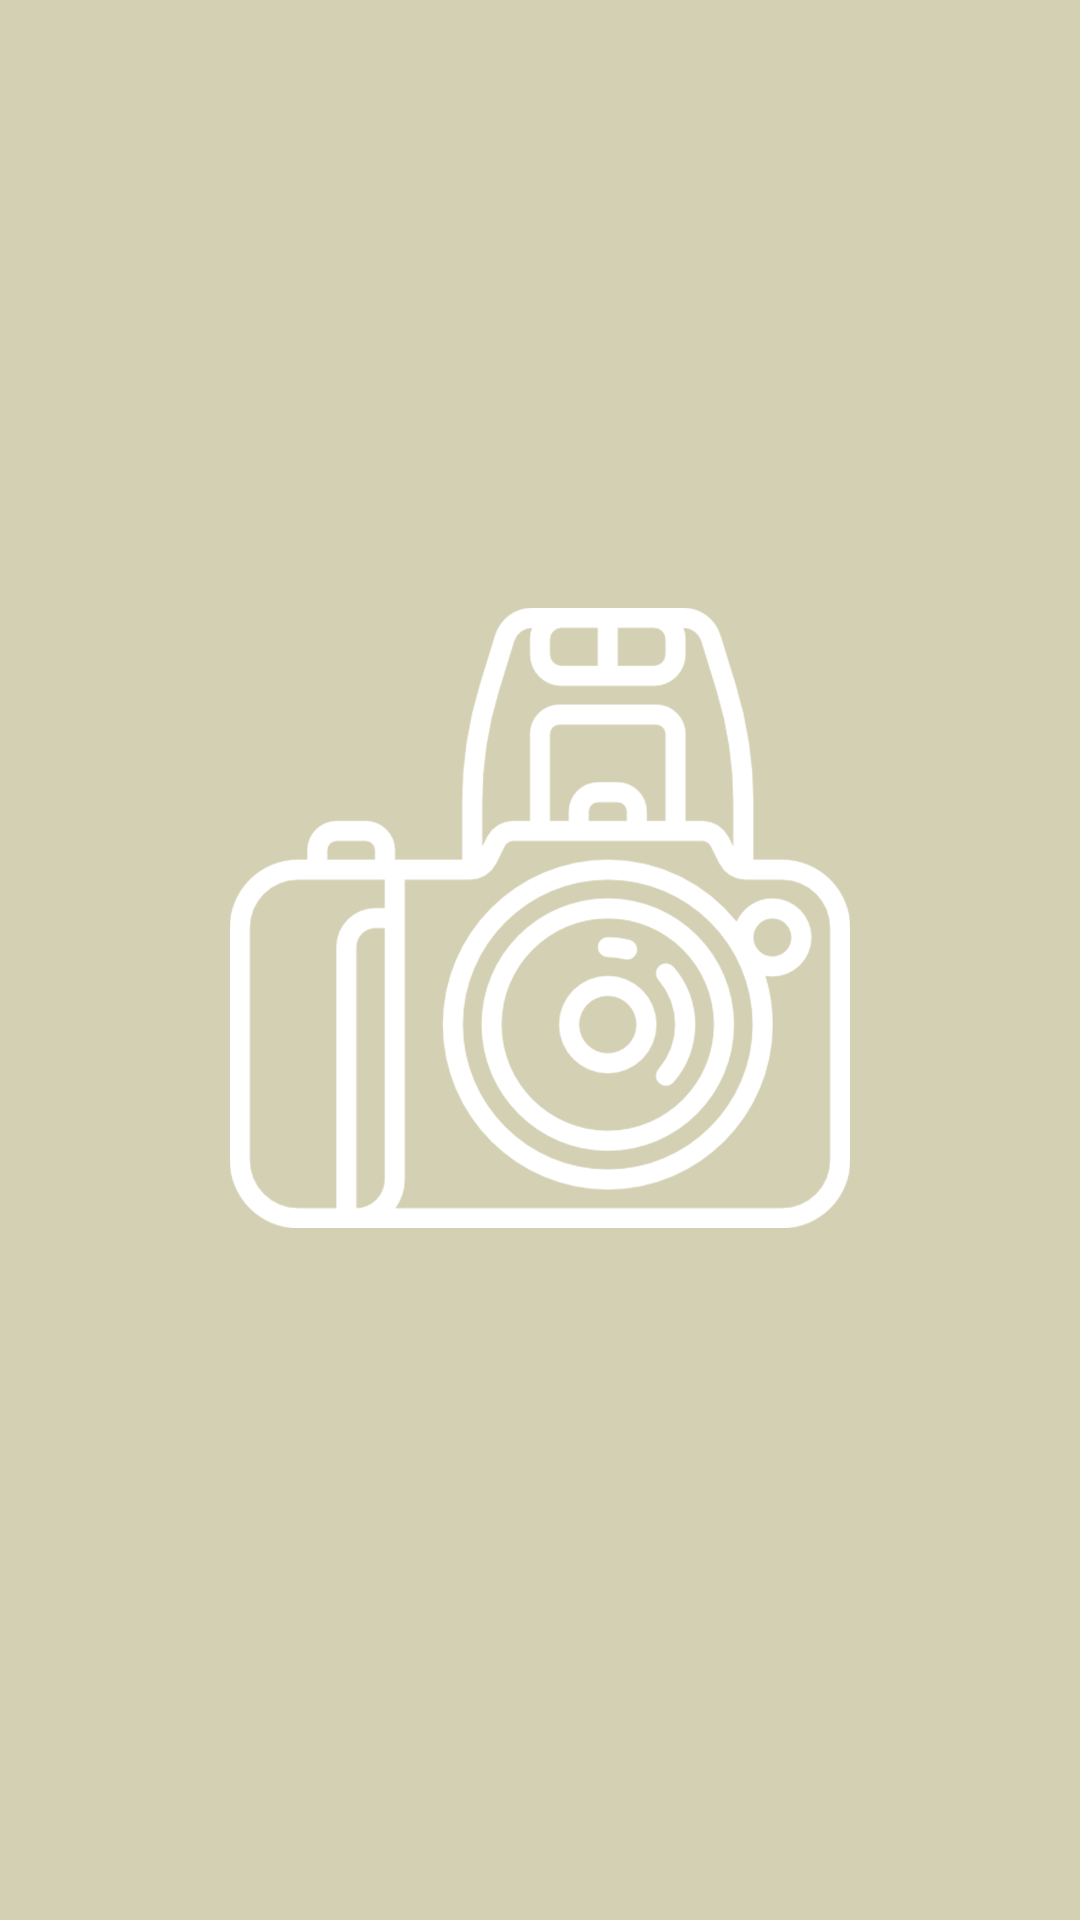 Photography Branding Kit Instagram Stories Highlights Icon. Etsy. Instagram logo, Camera icon, Photography branding